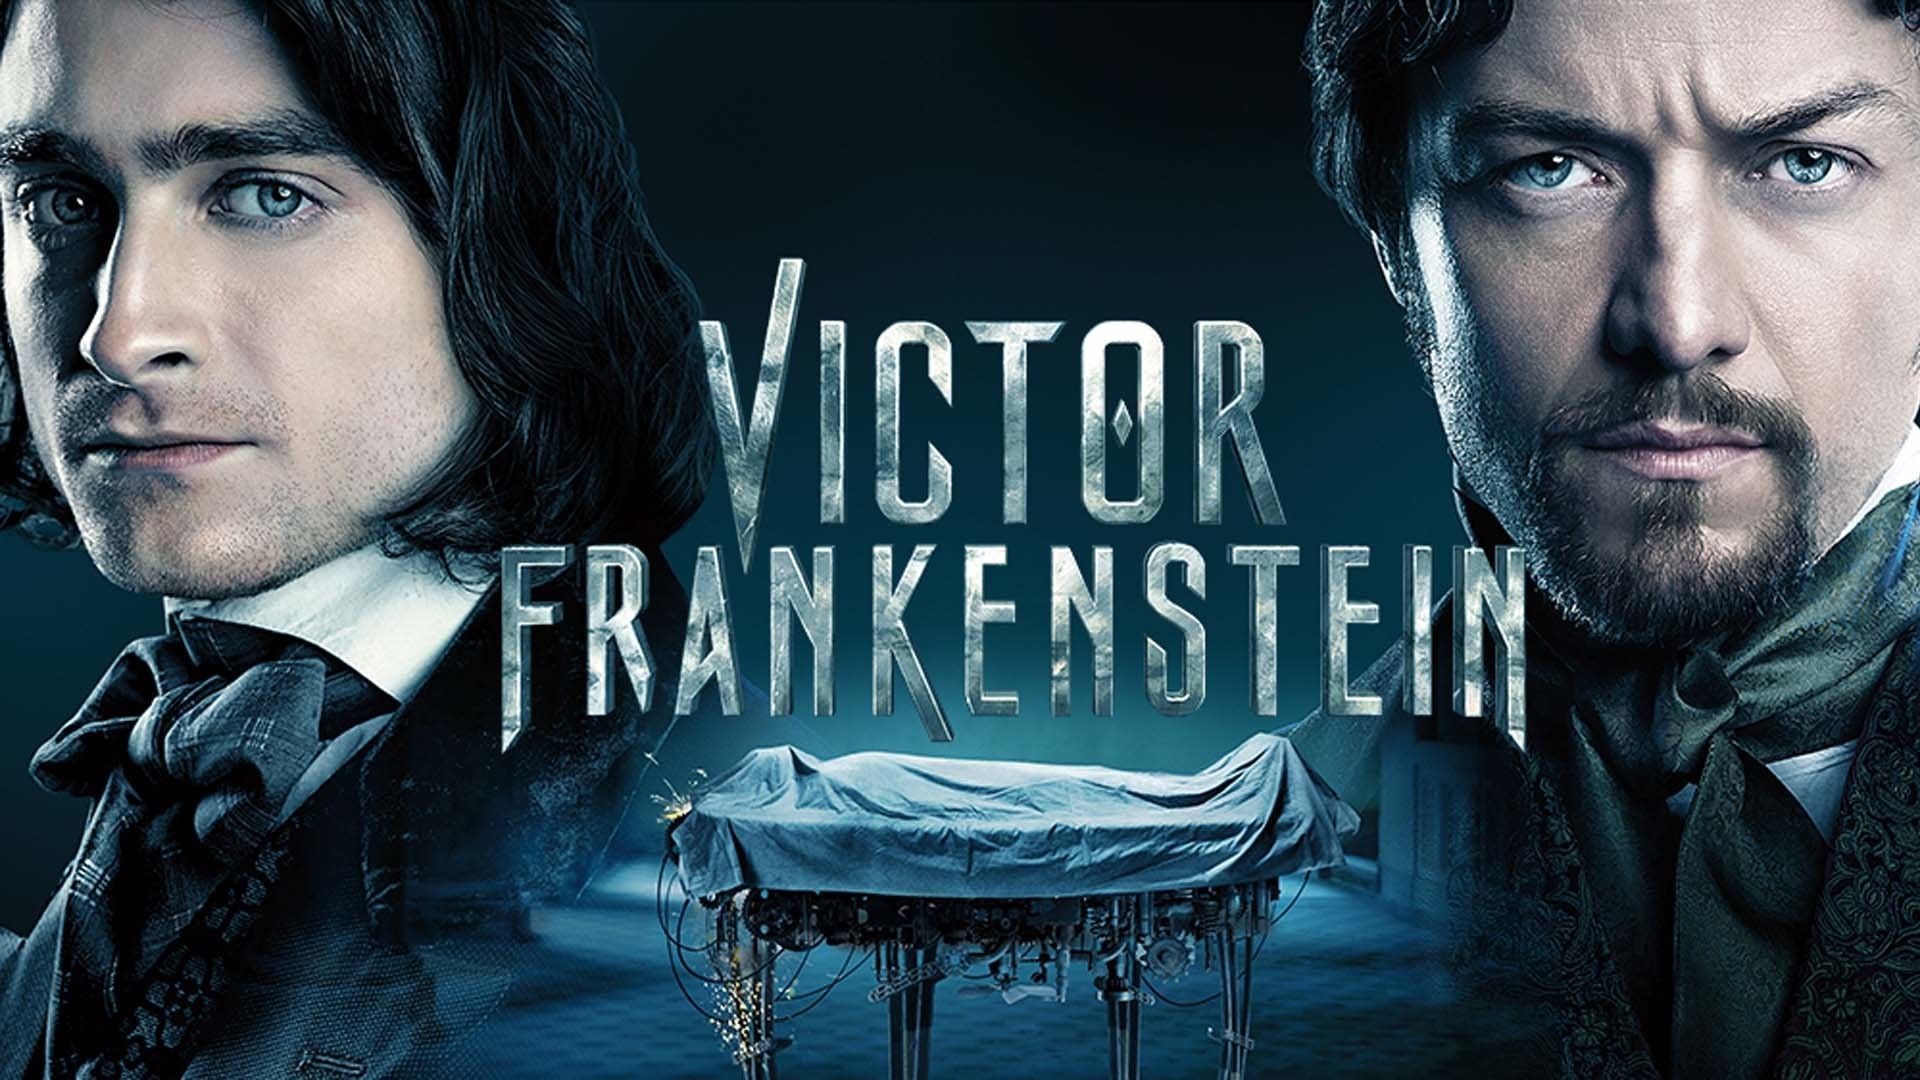 1920x1080 Victor Frankenstein Pictures Victor Frankenstein Backgrounds